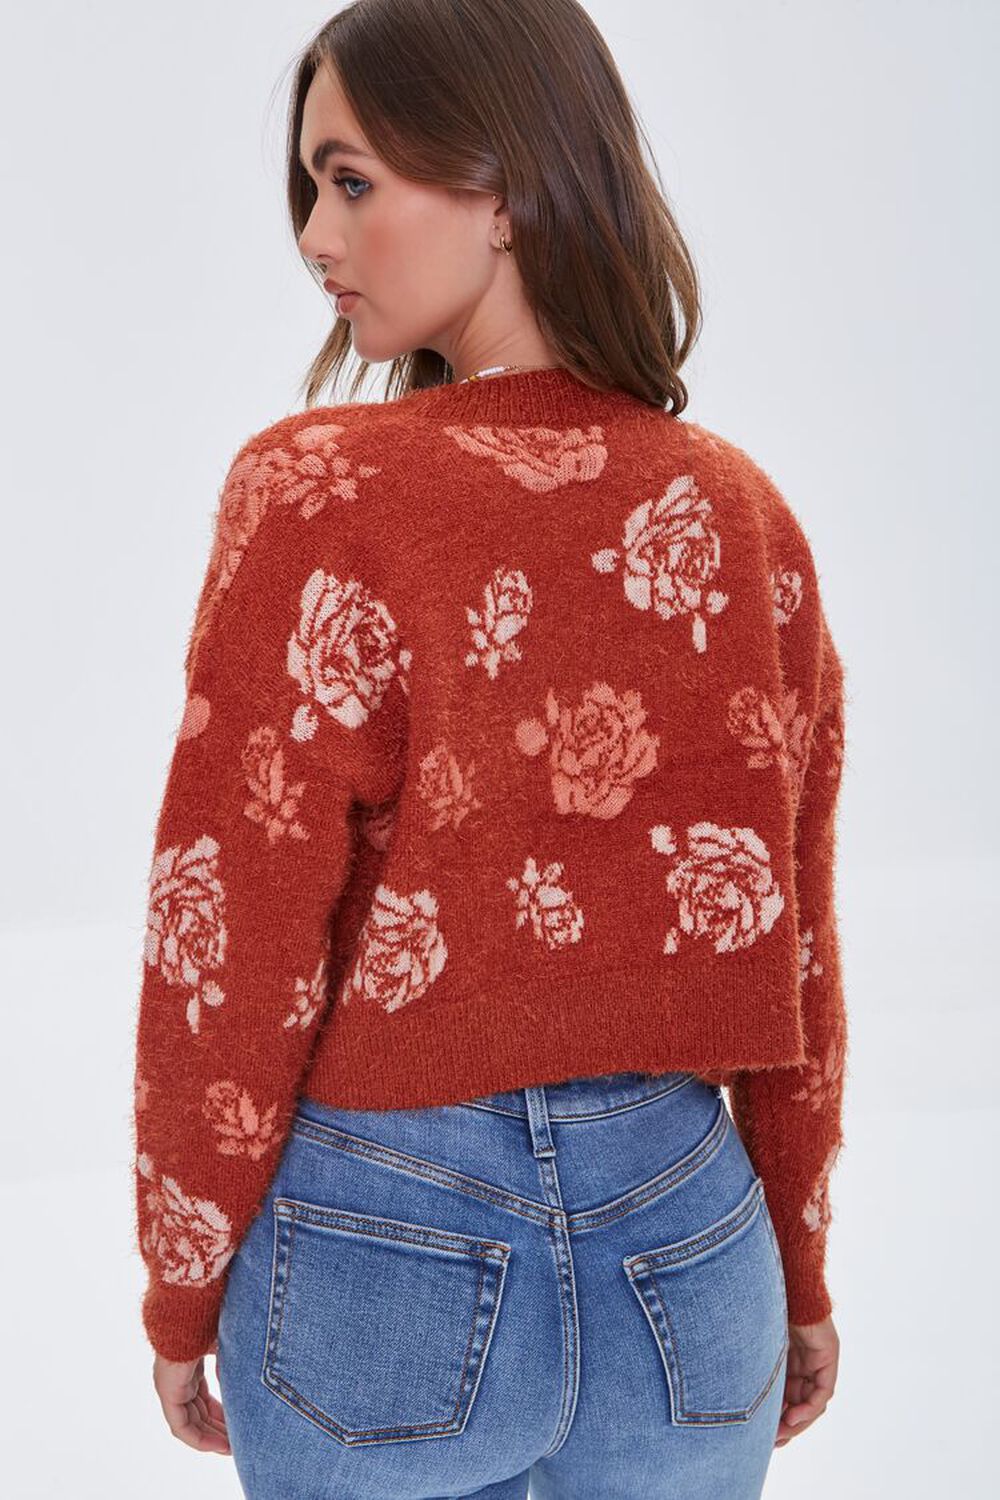 RUST/MULTI Rose Fuzzy Cardigan Sweater, image 3